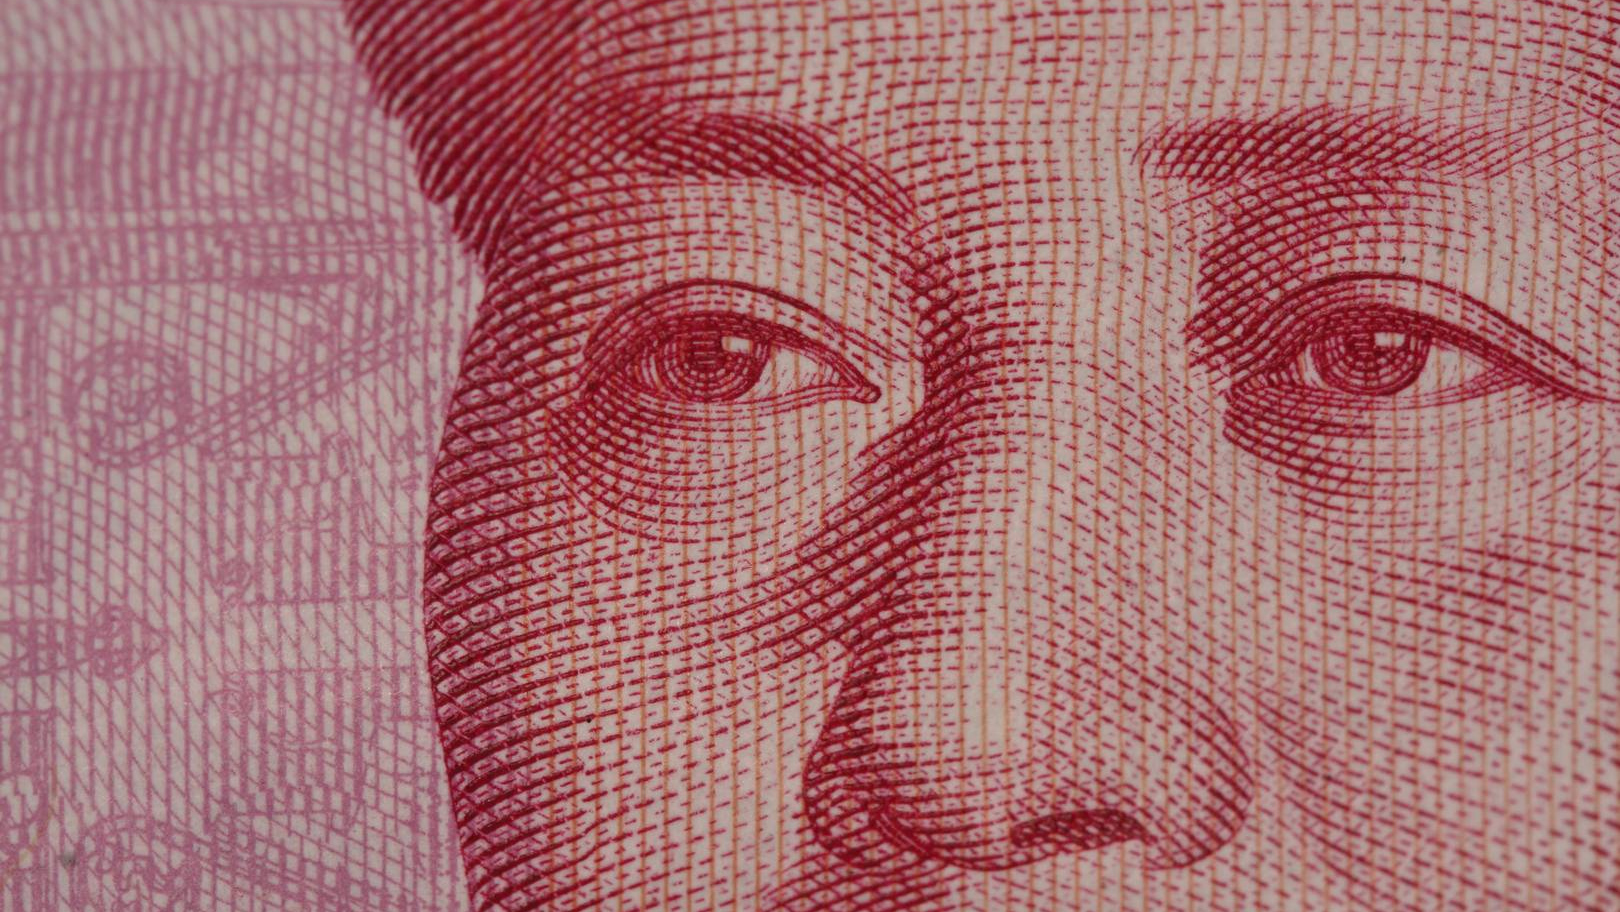 Китайский юань (фрагмент)